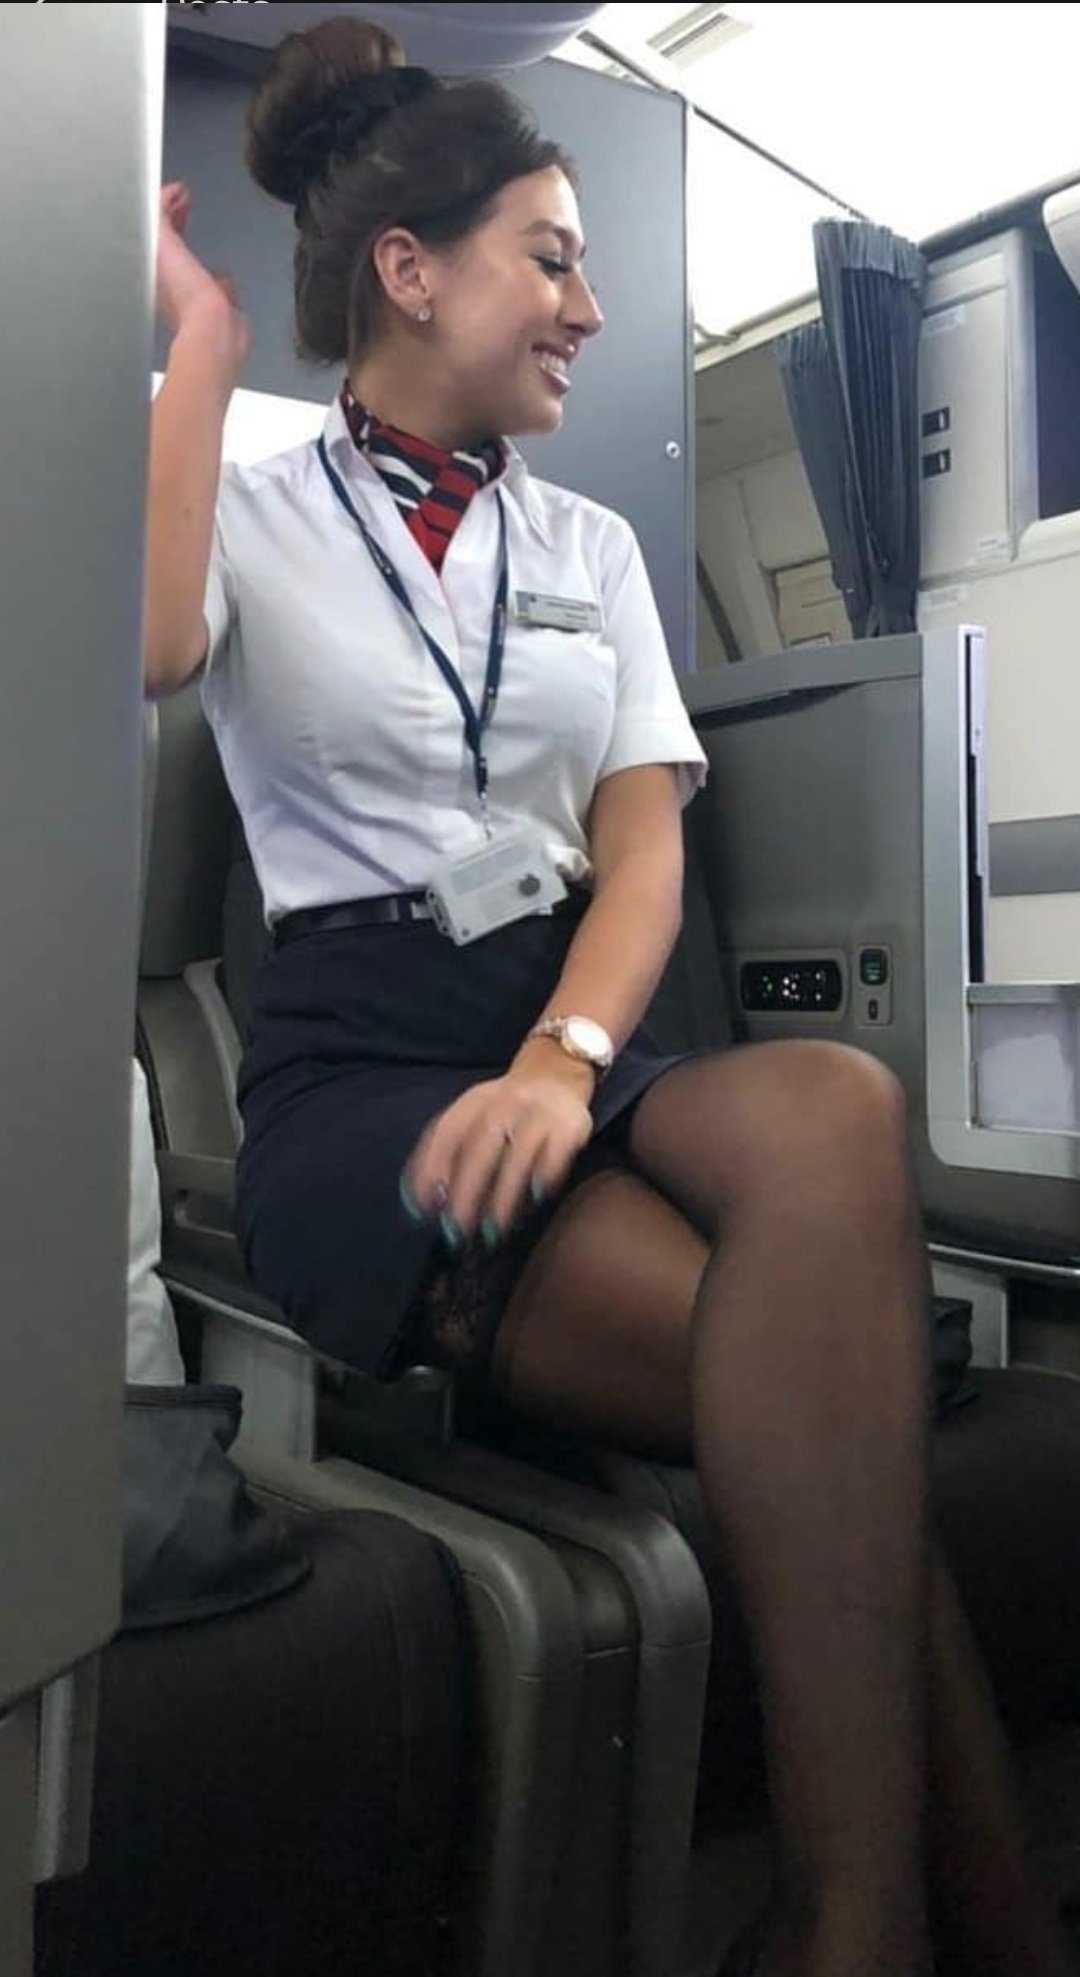 Flight attendant upskirt